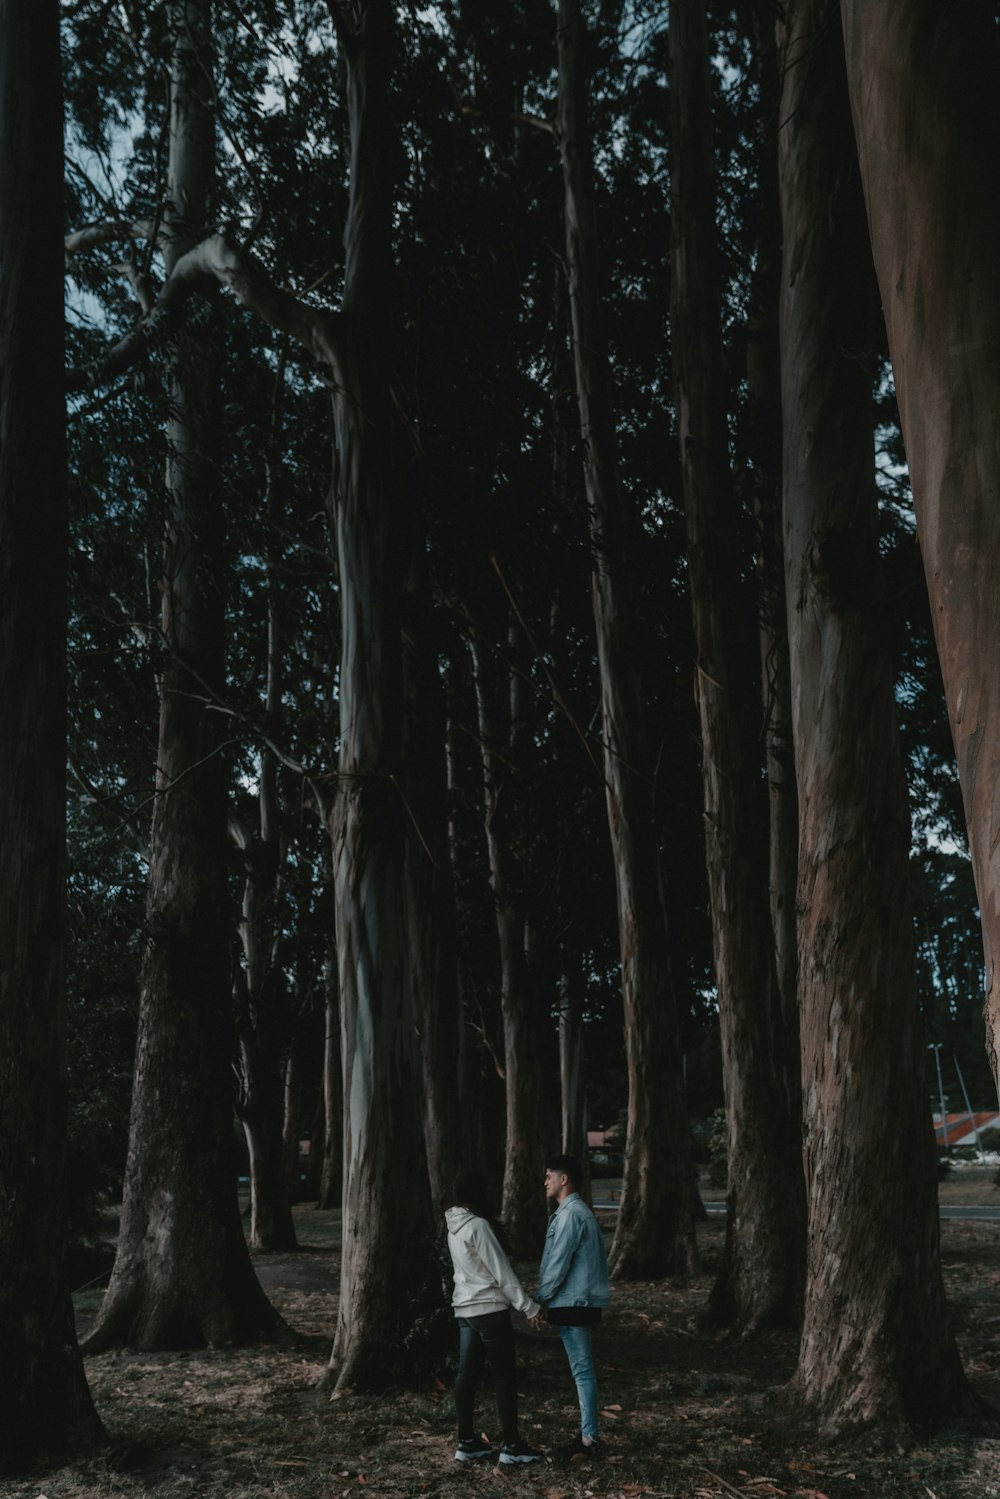 people walking on pathway between trees during daytime